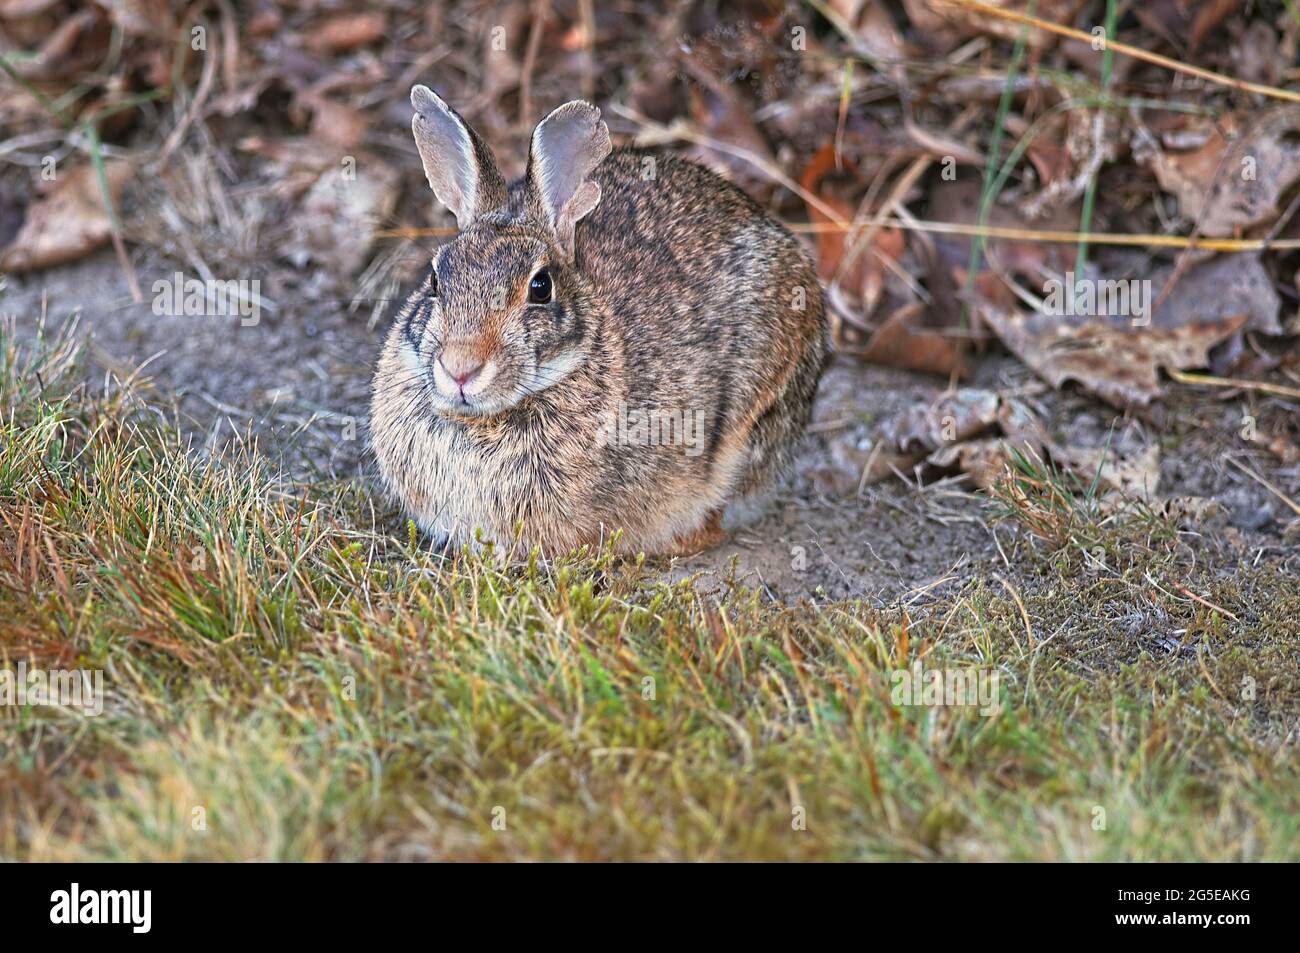 Western brush rabbit 3 (Sylvilagus bachmani) California brush rabbit. Stock Photo